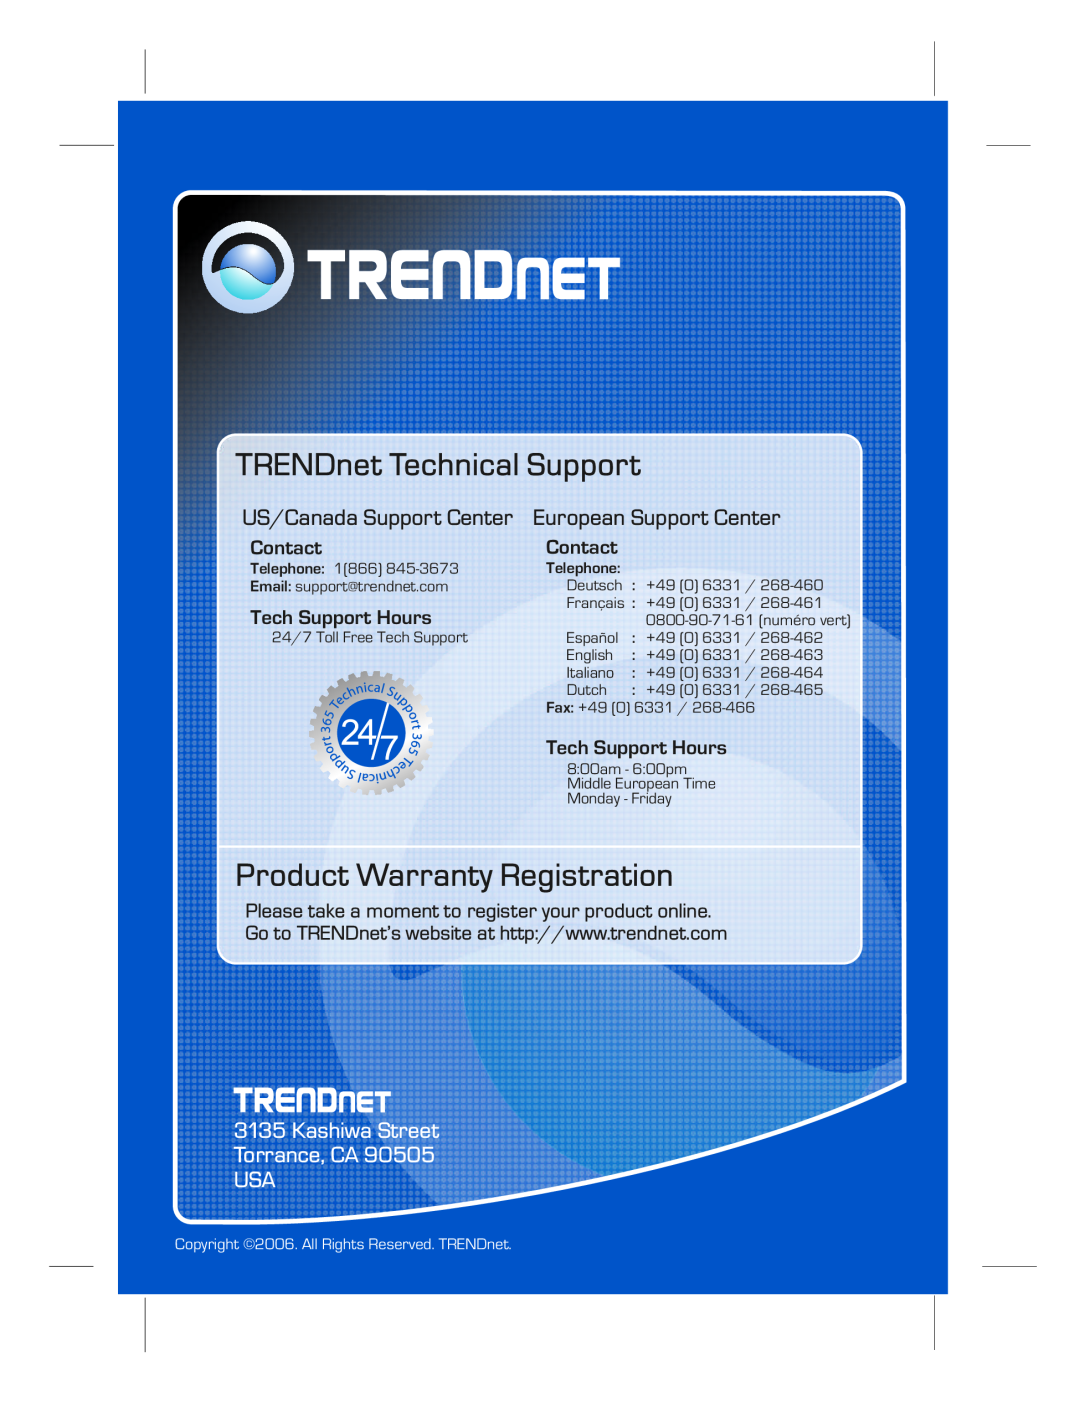 TRENDnet TFU-430 manual TRENDnet Technical Support, Product Warranty Registration, Kashiwa Street Torrance, CA USA, Contact 